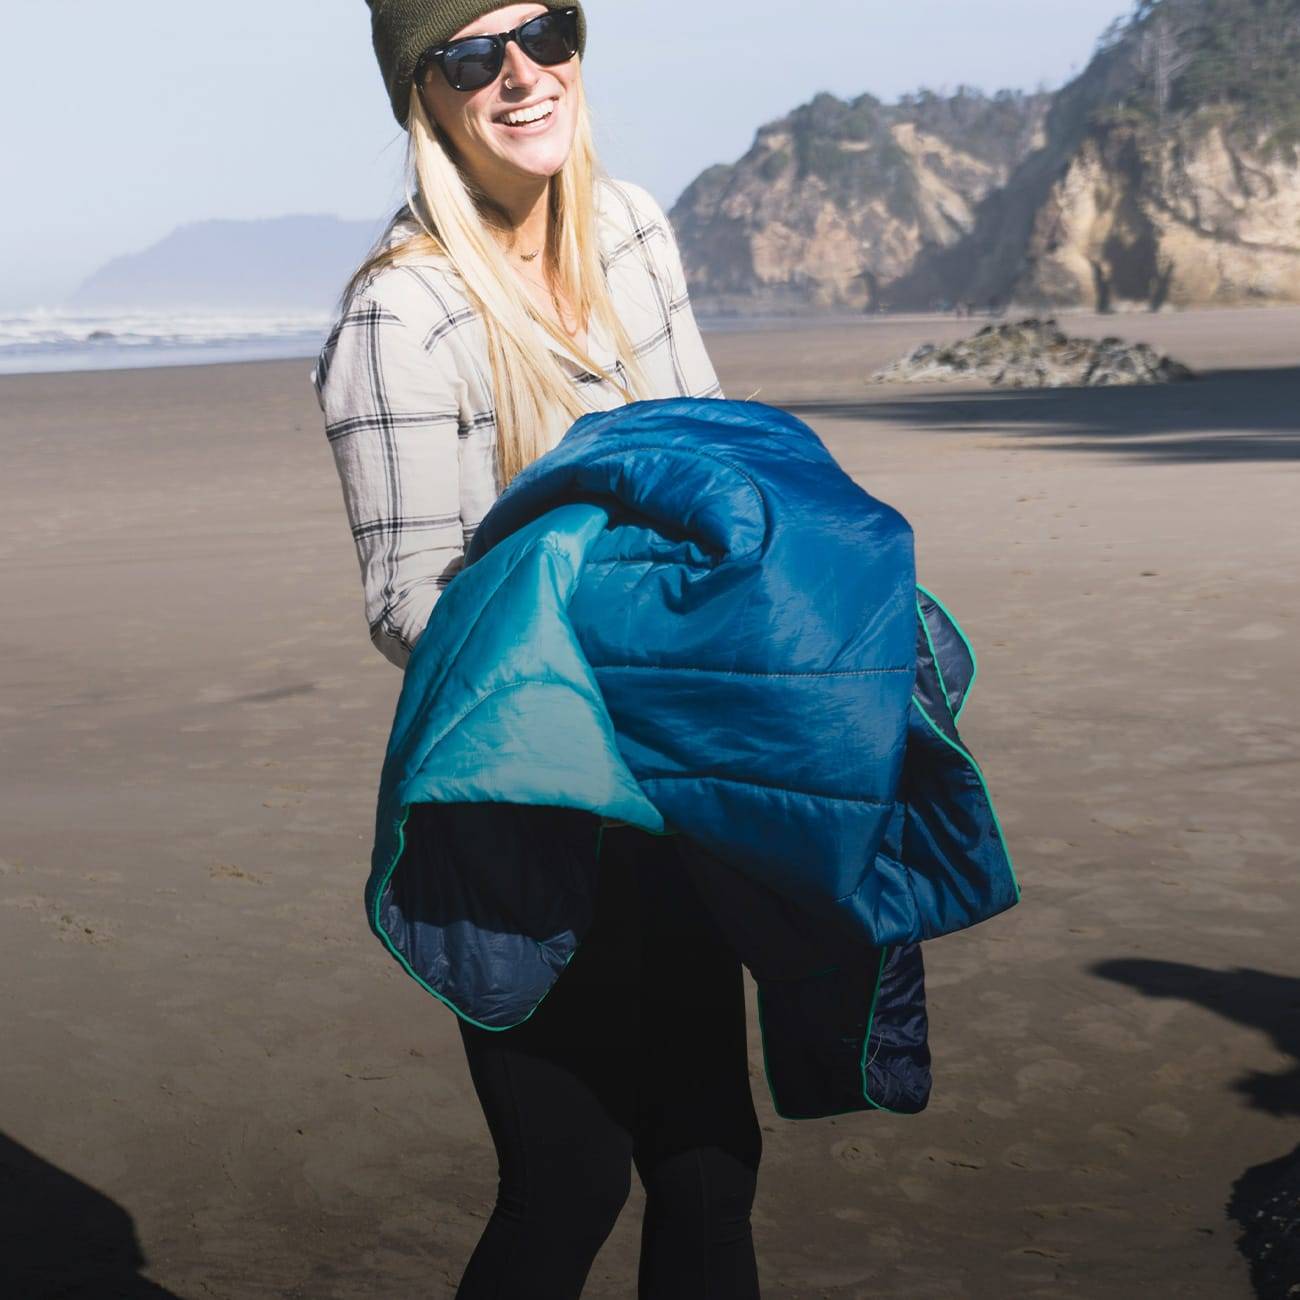 Woman walking on beach holding Original Puffy Blanket